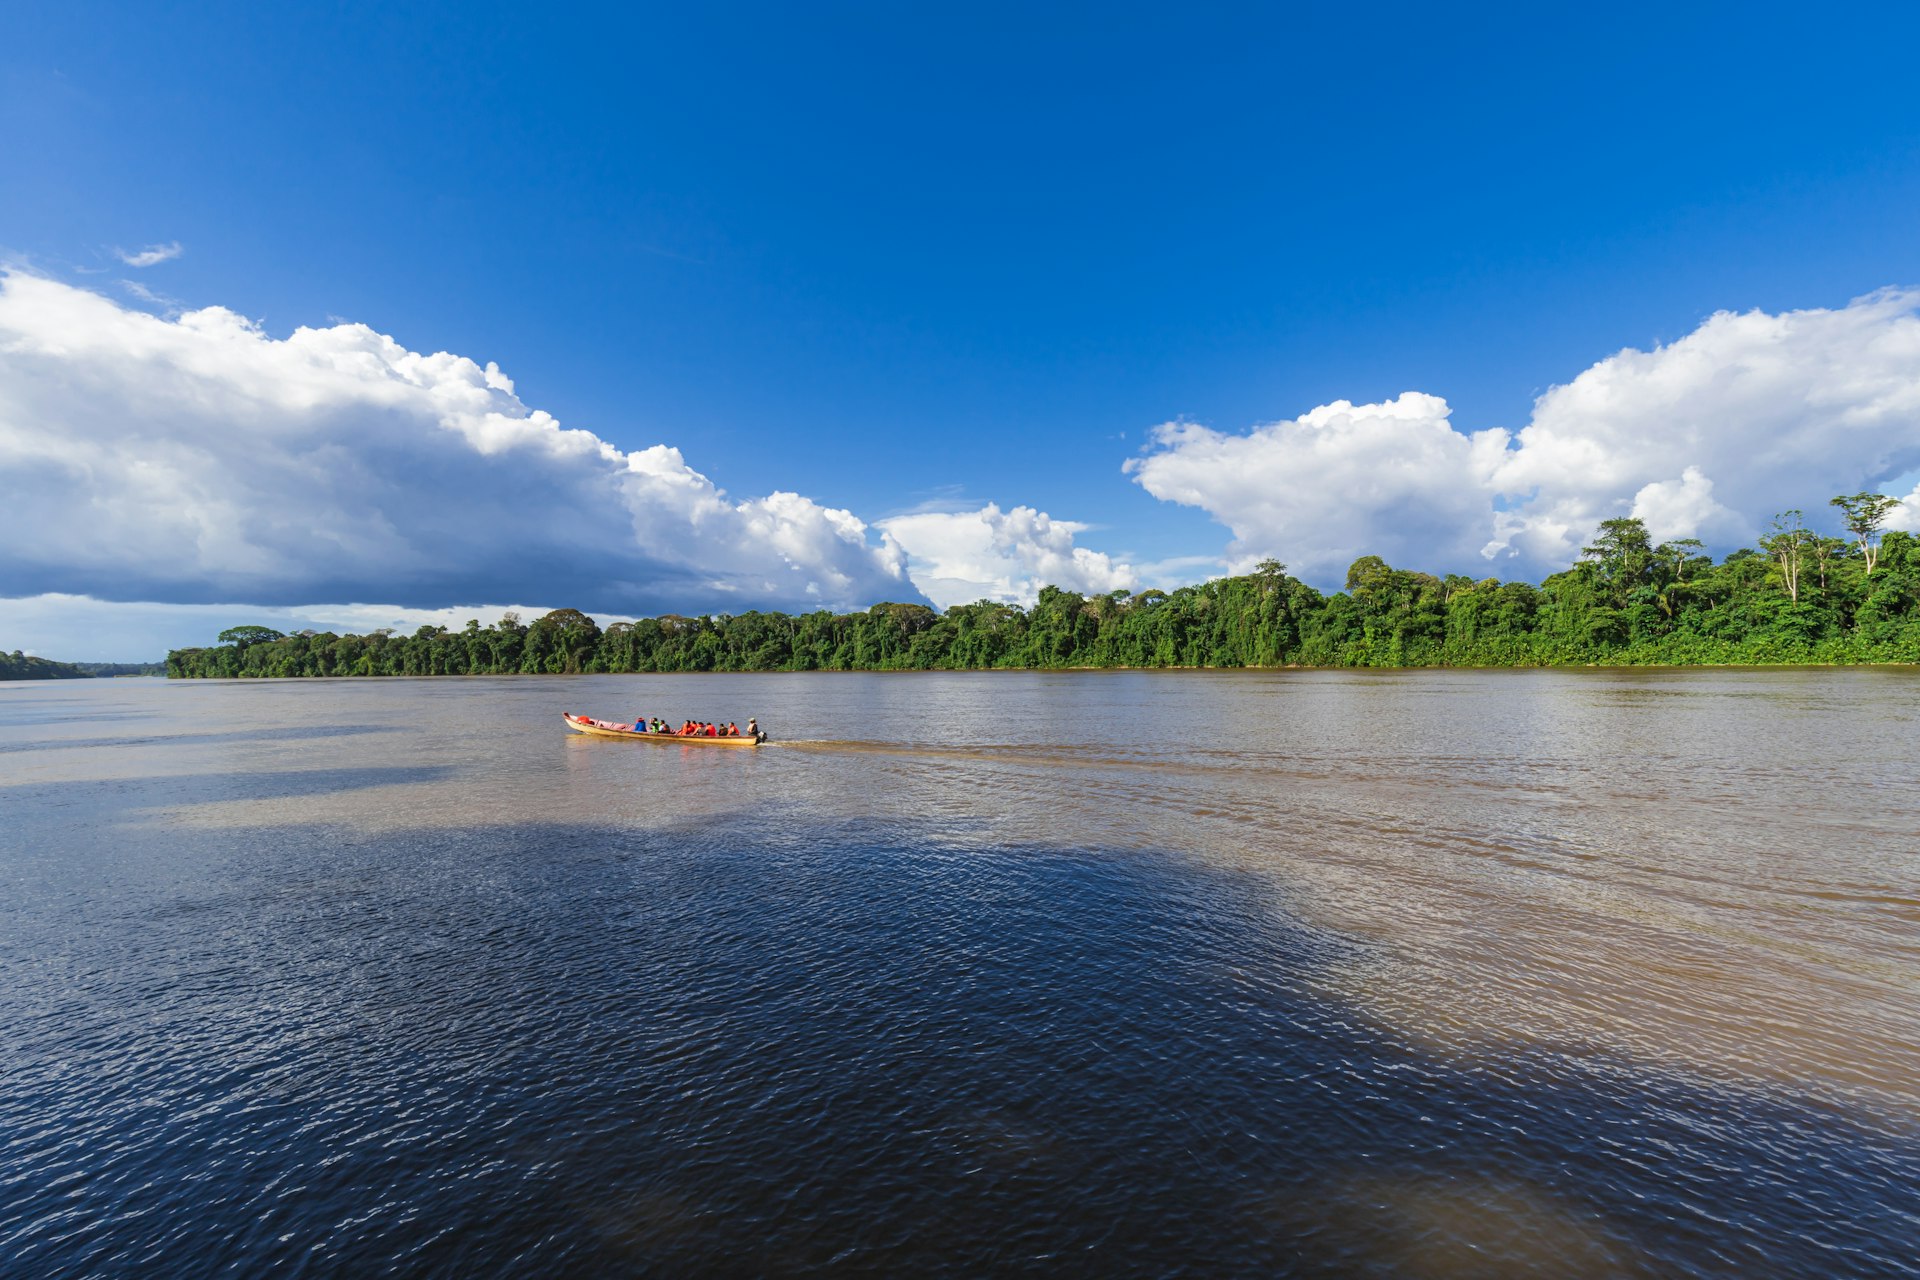 Sailing along the Suriname River in Brokopondo, Suriname